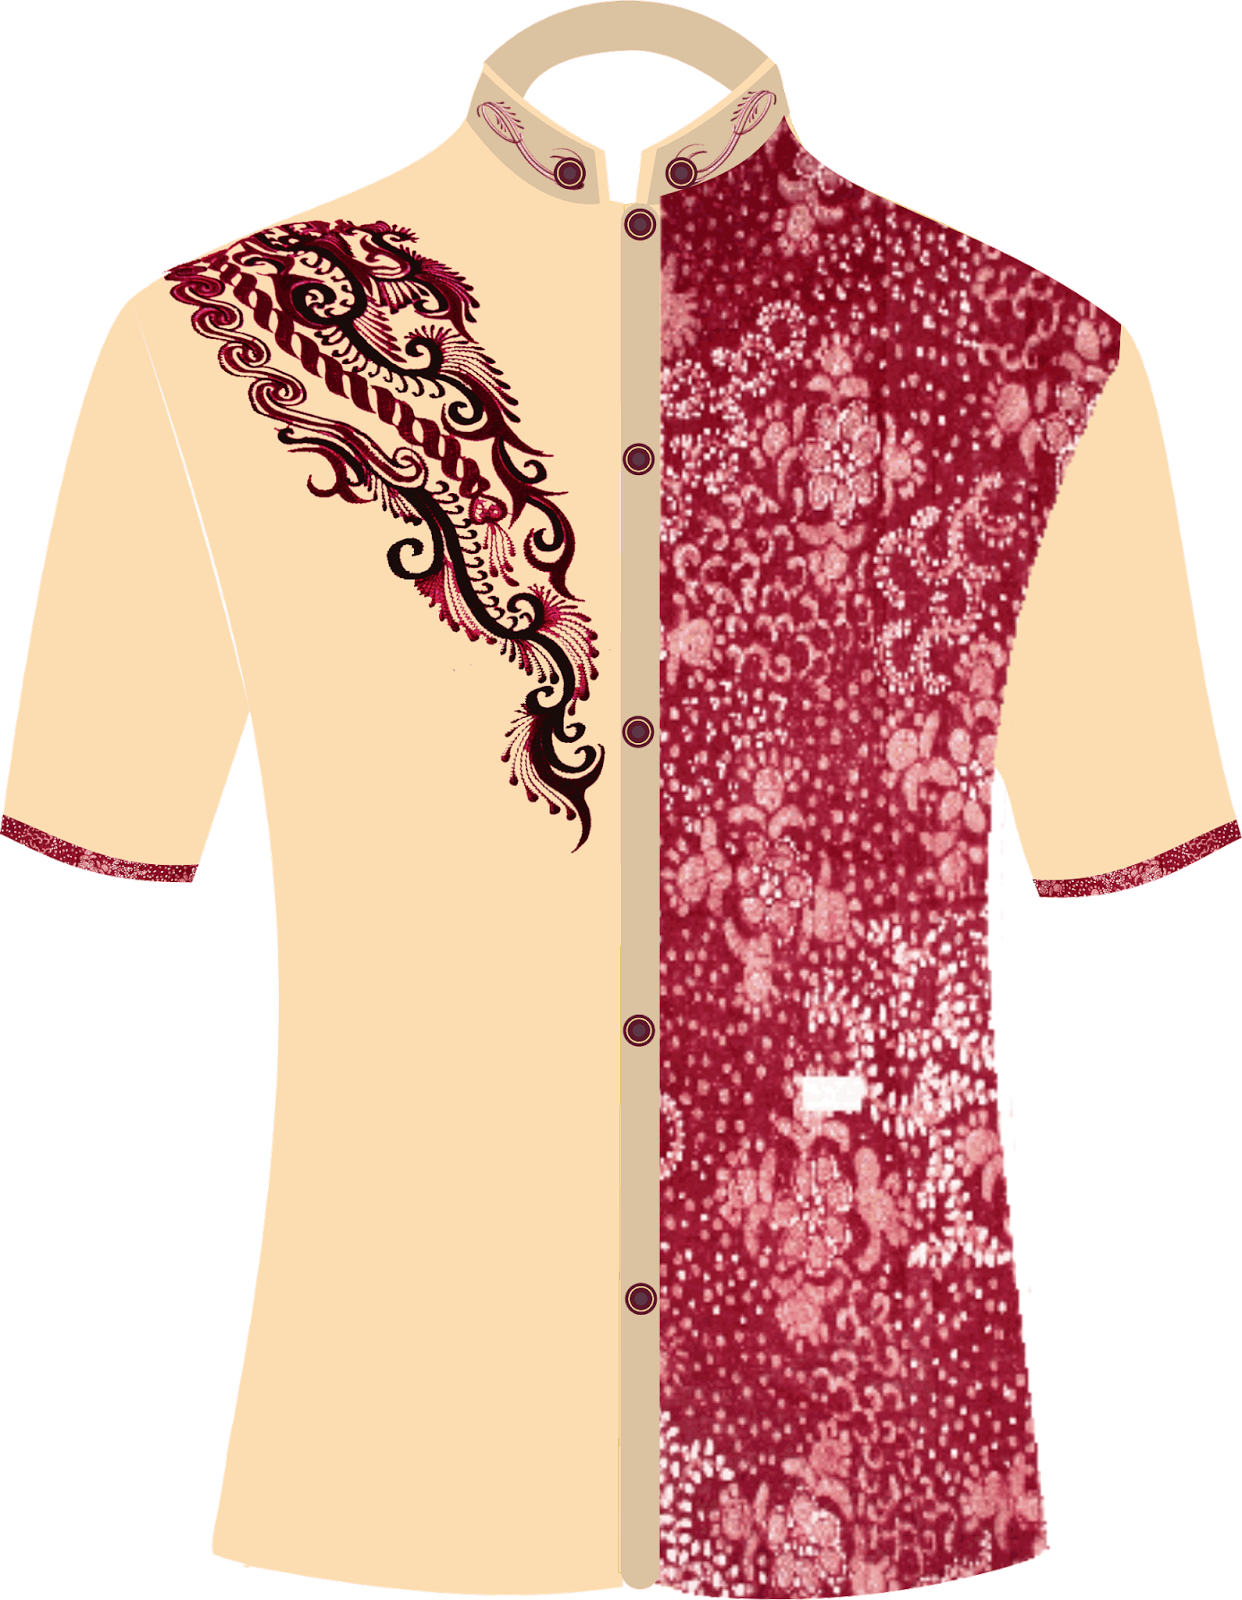 Download Desain Baju Batik  Cdr Desaprojek